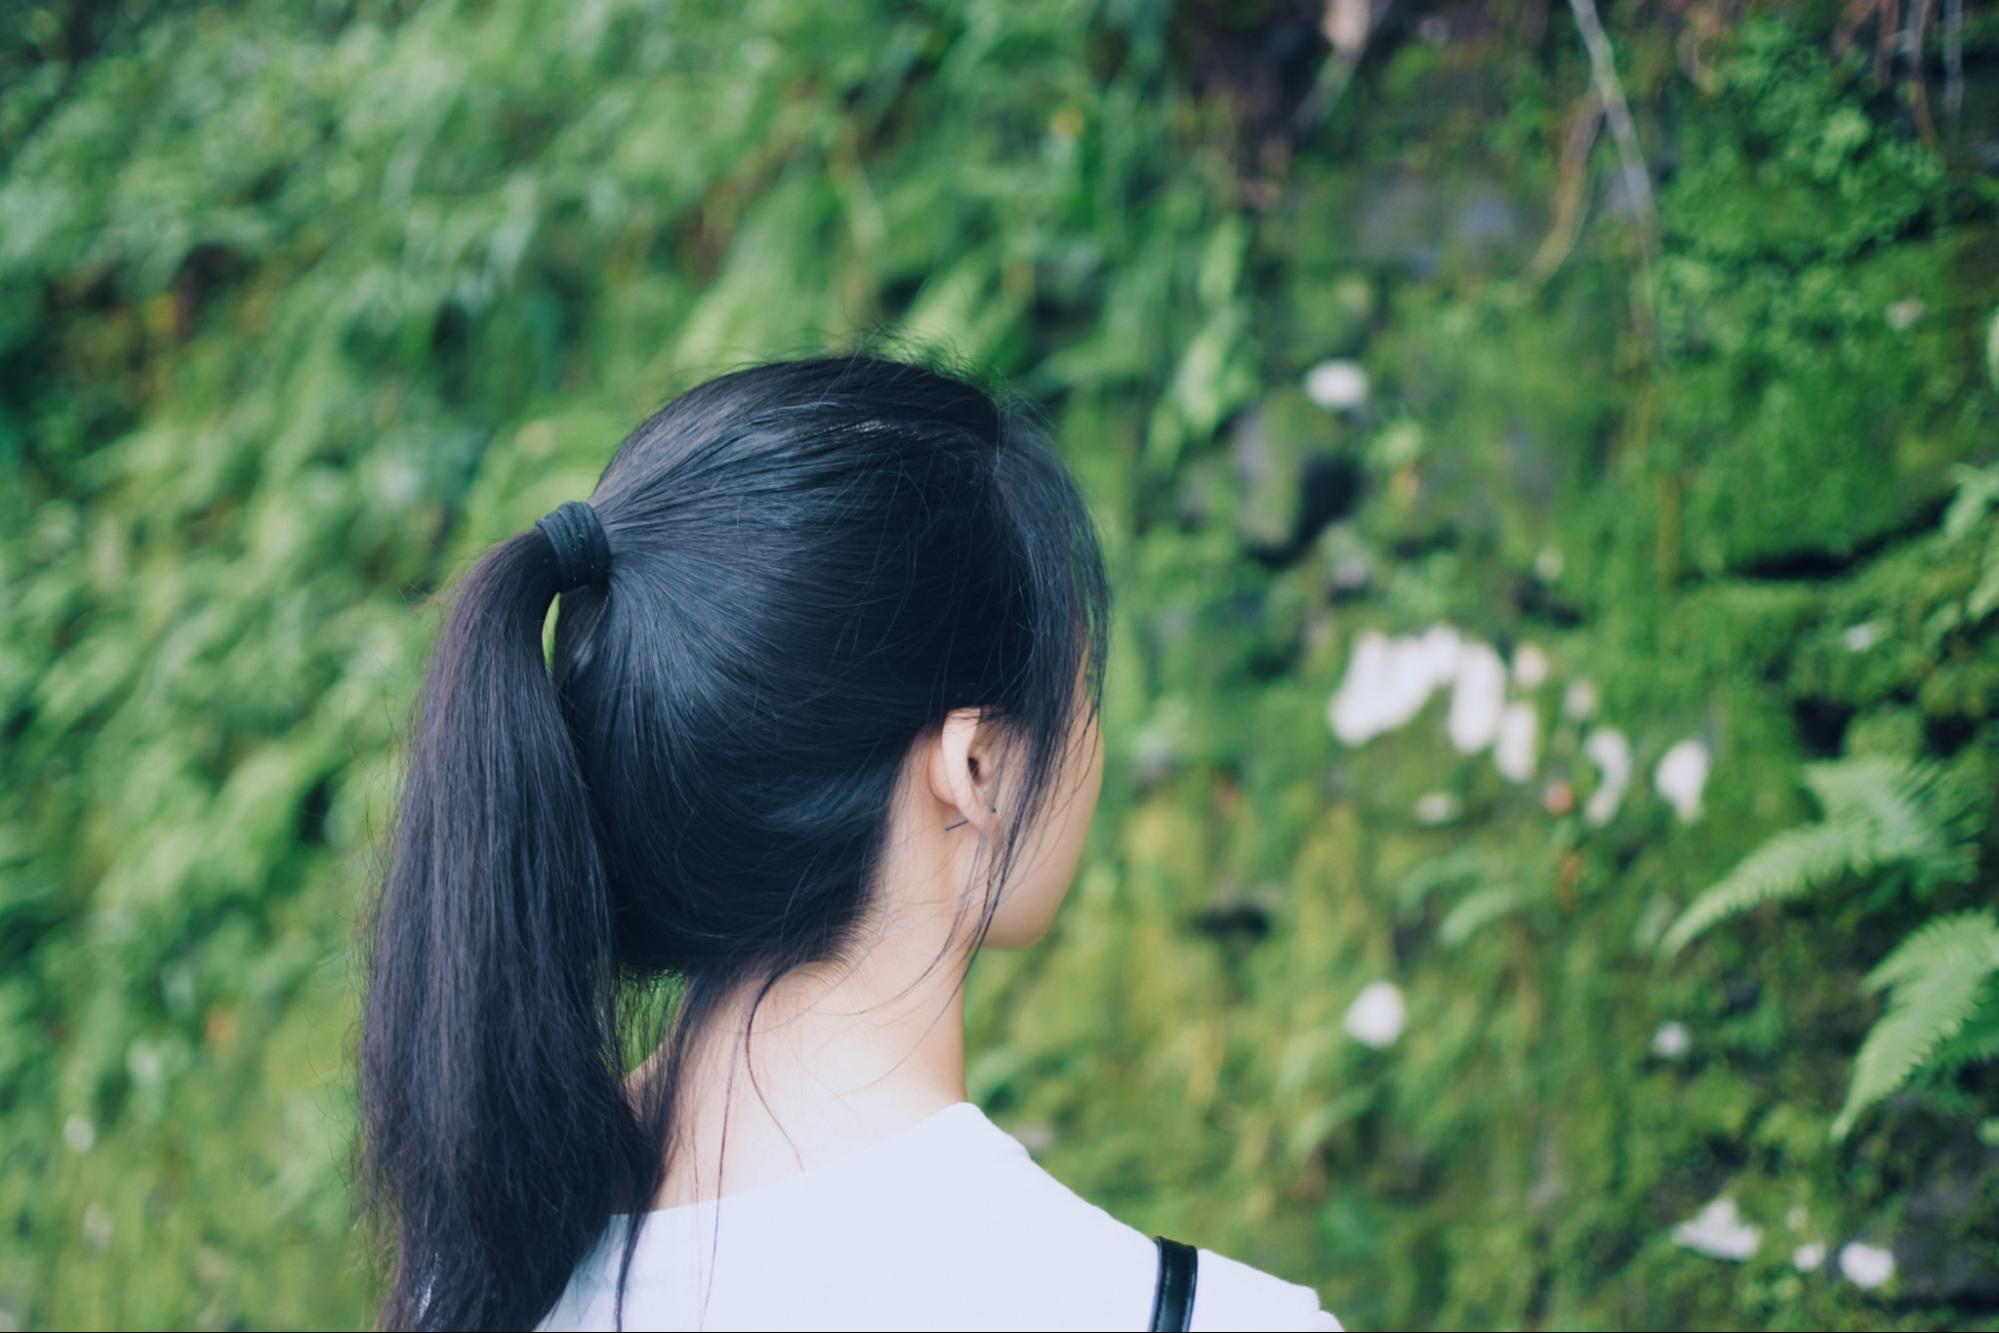 japanese schools ban ponytails - ponytail girl